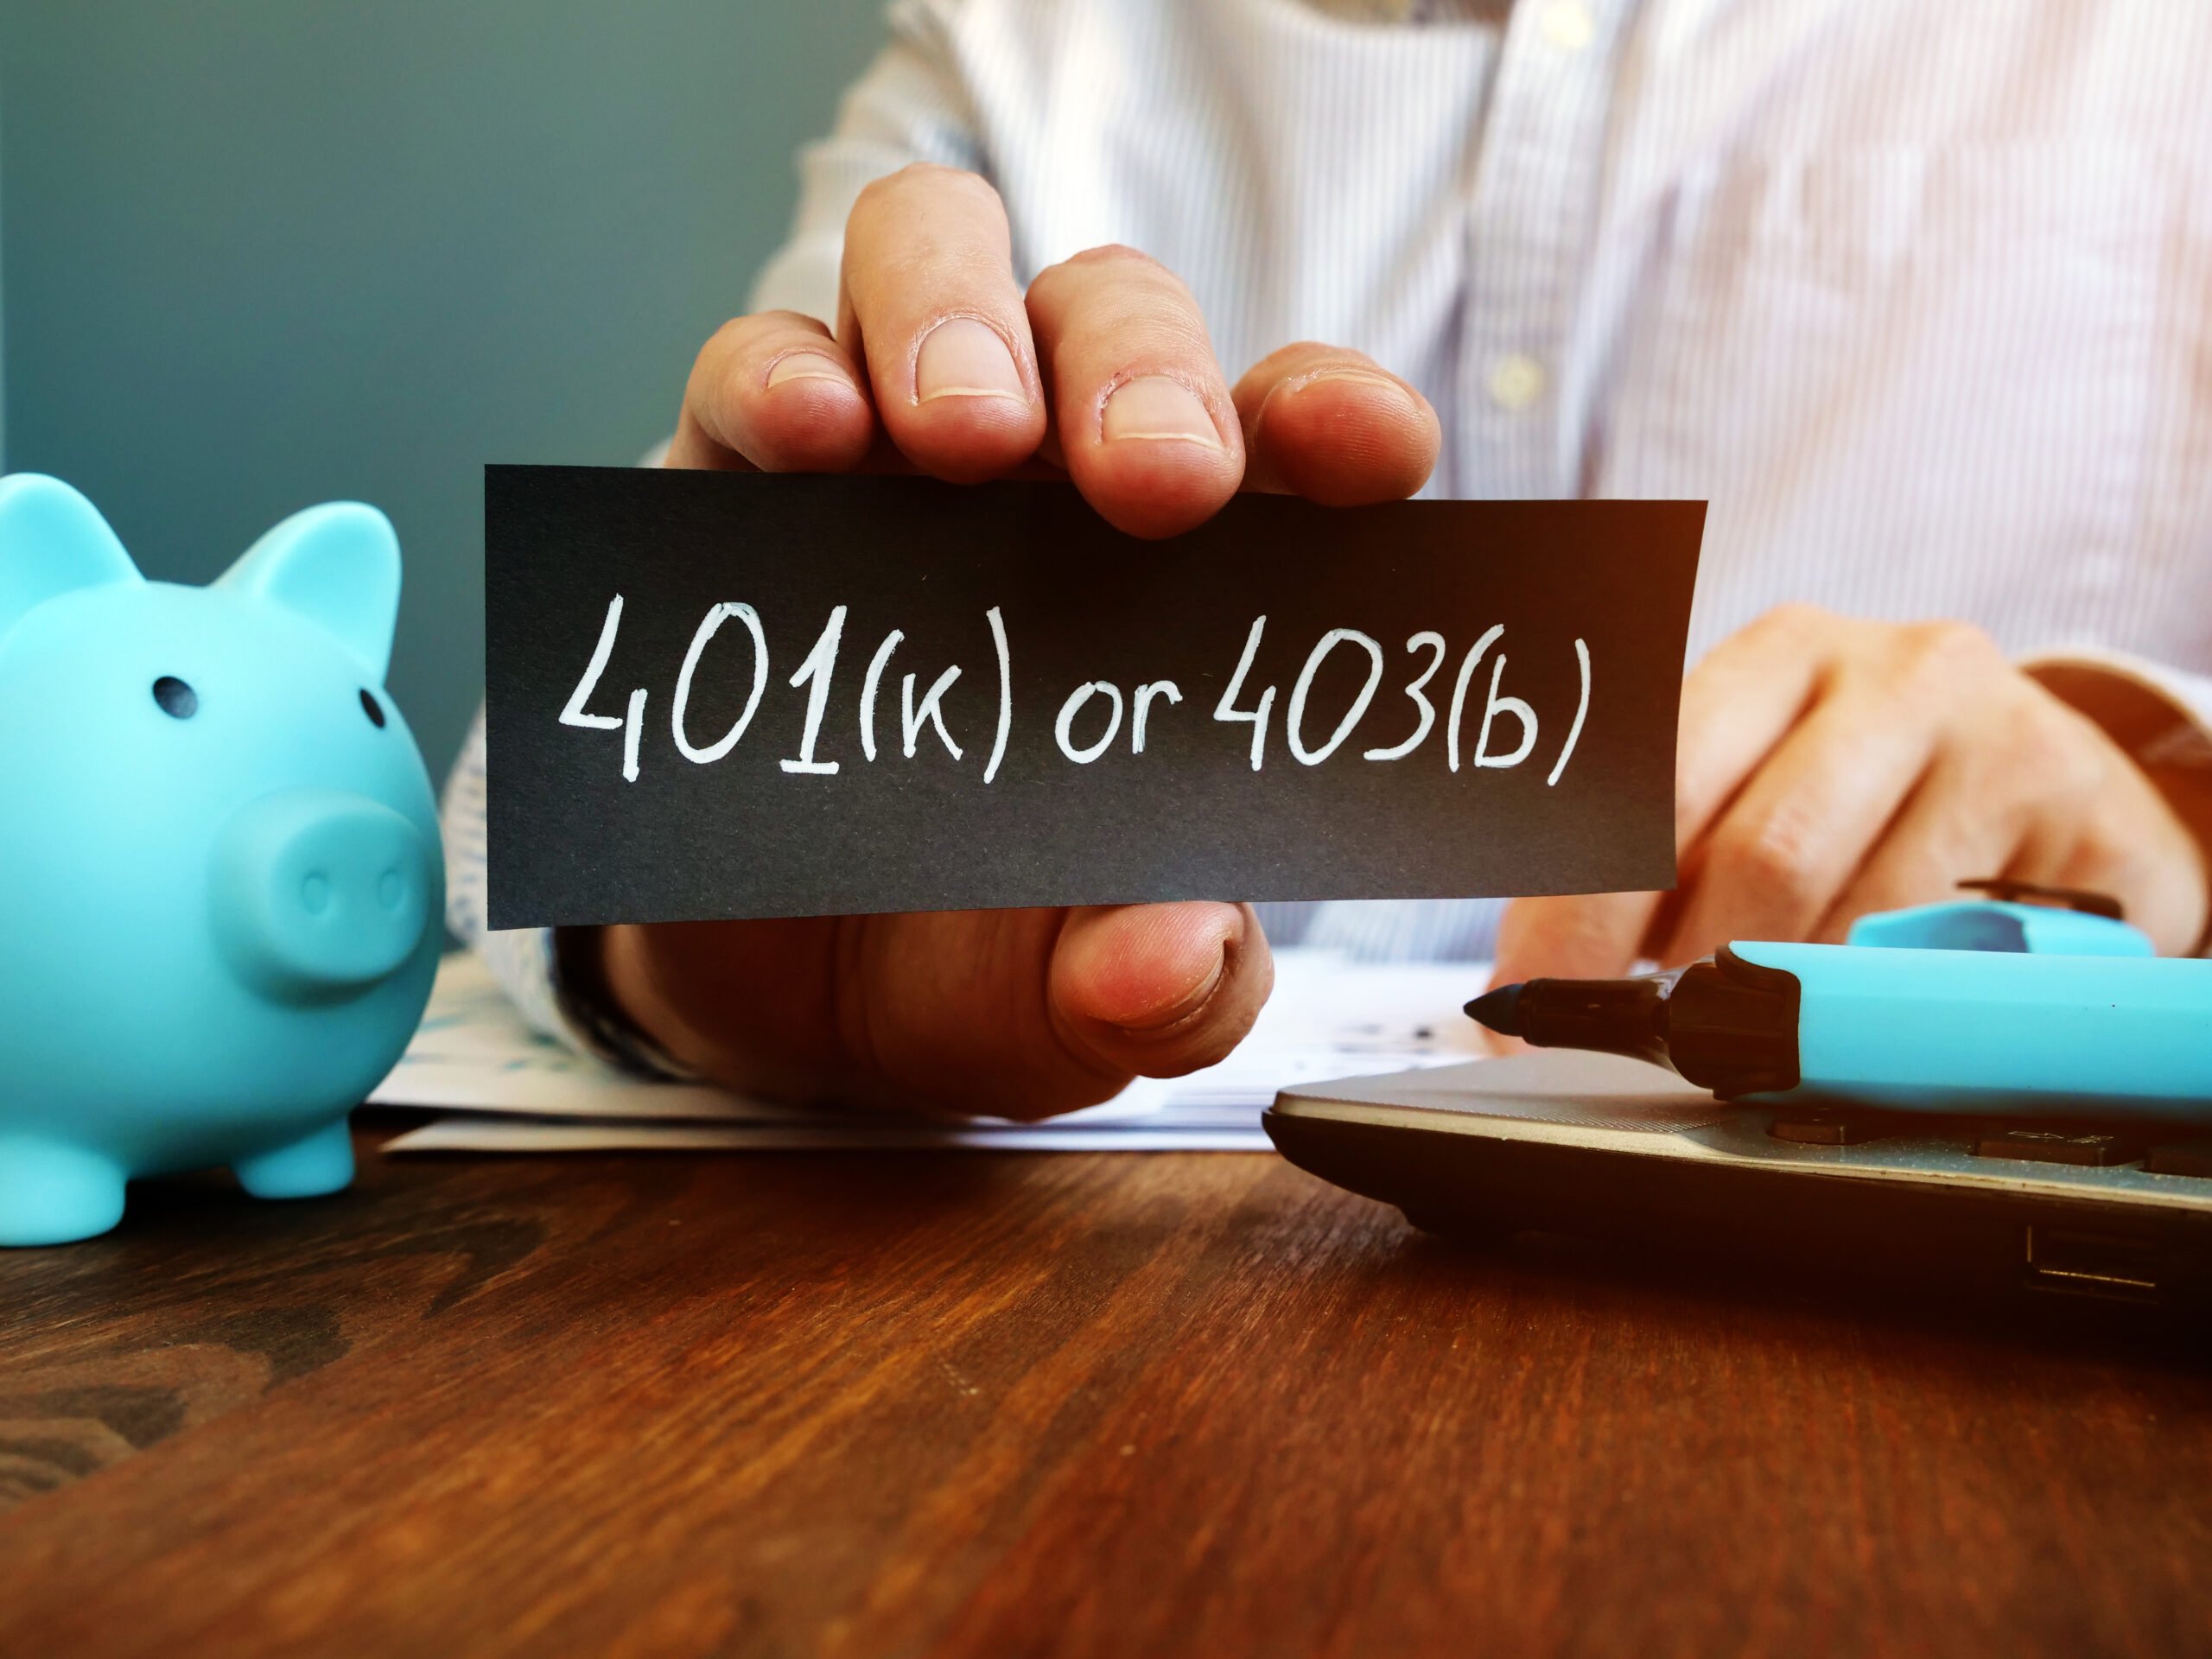 403b vs 401k Plans: What